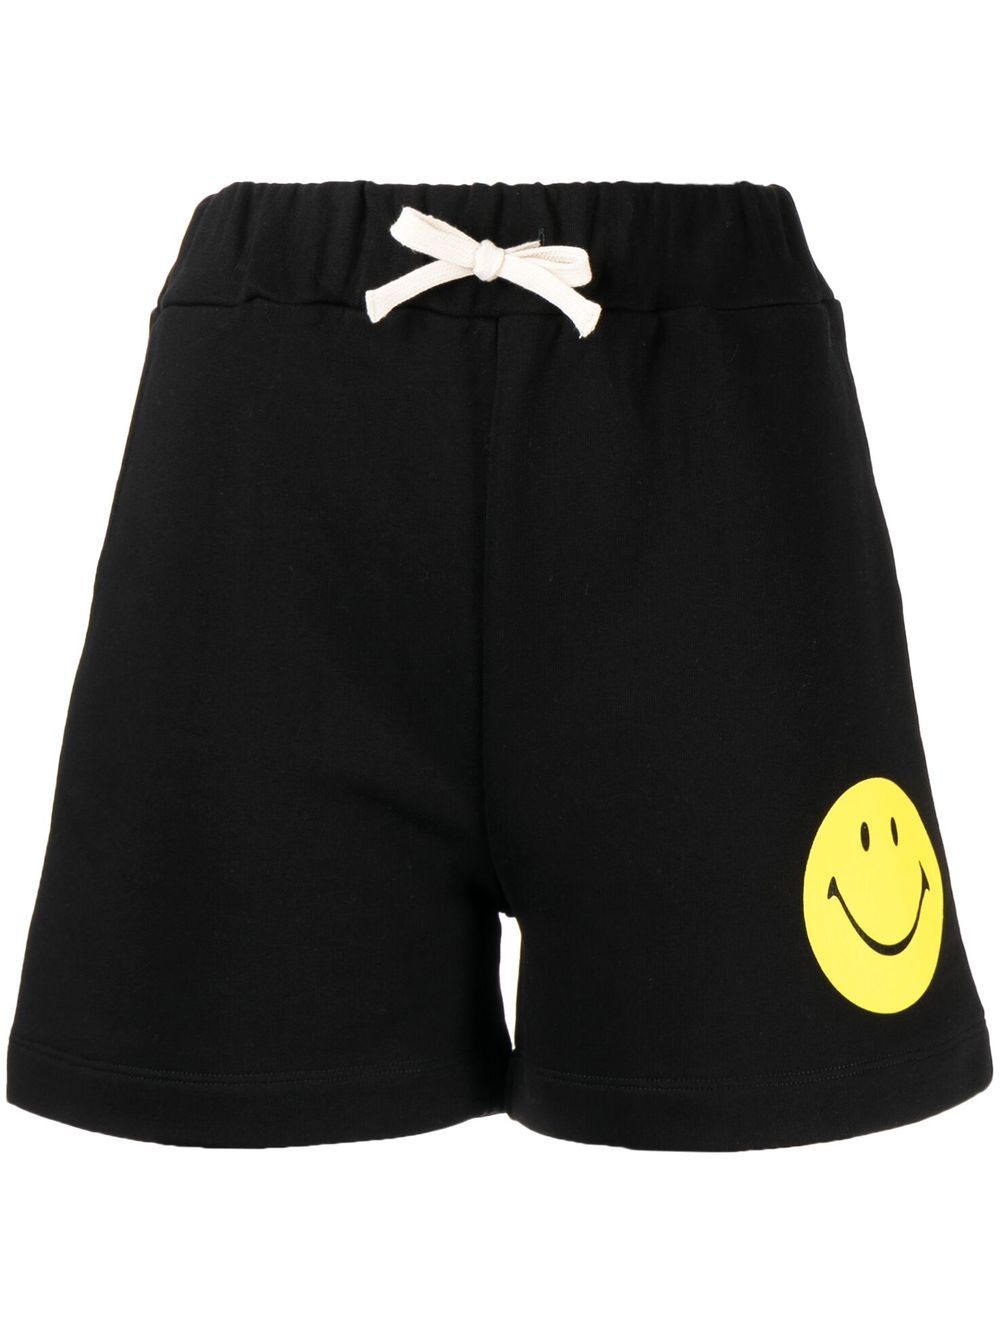 Joshua Sanders smiley-face print cotton shorts - Black von Joshua Sanders